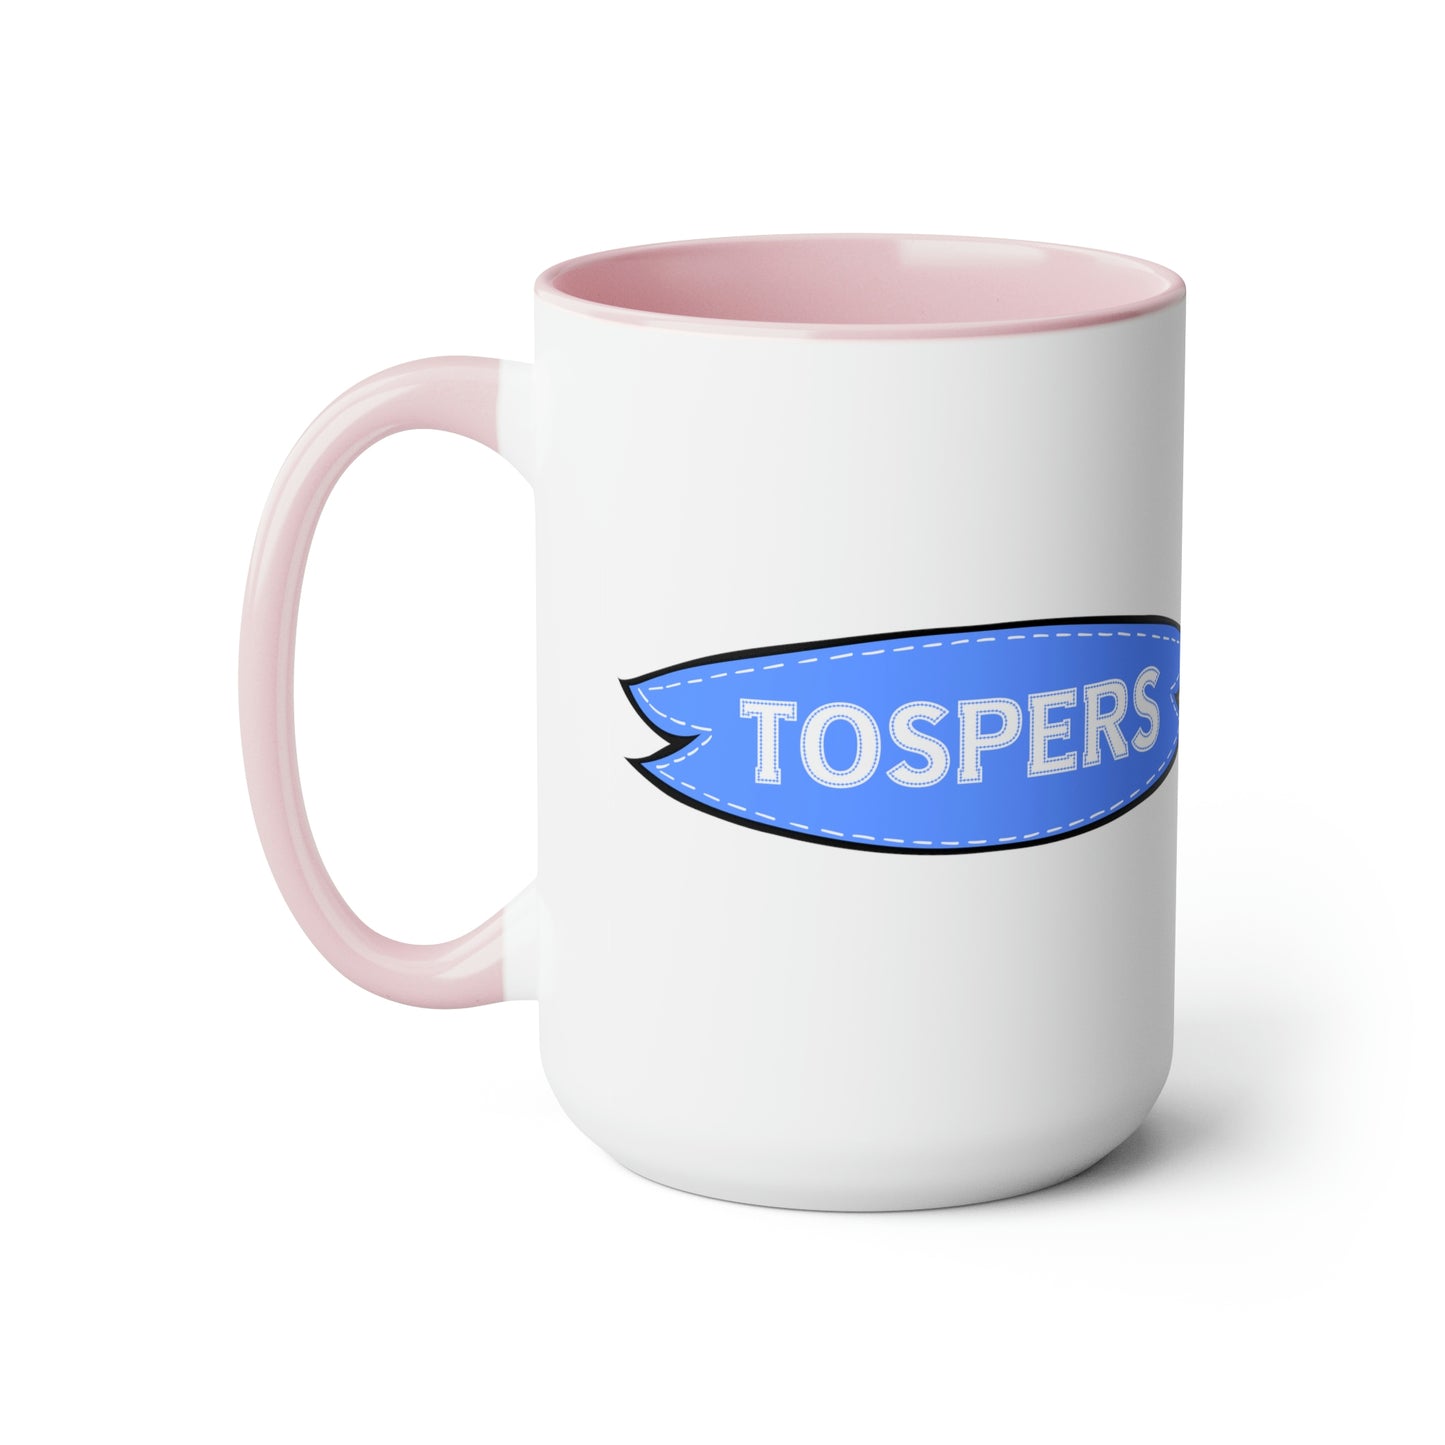 Tospers Premium Coffee Mug, 15oz